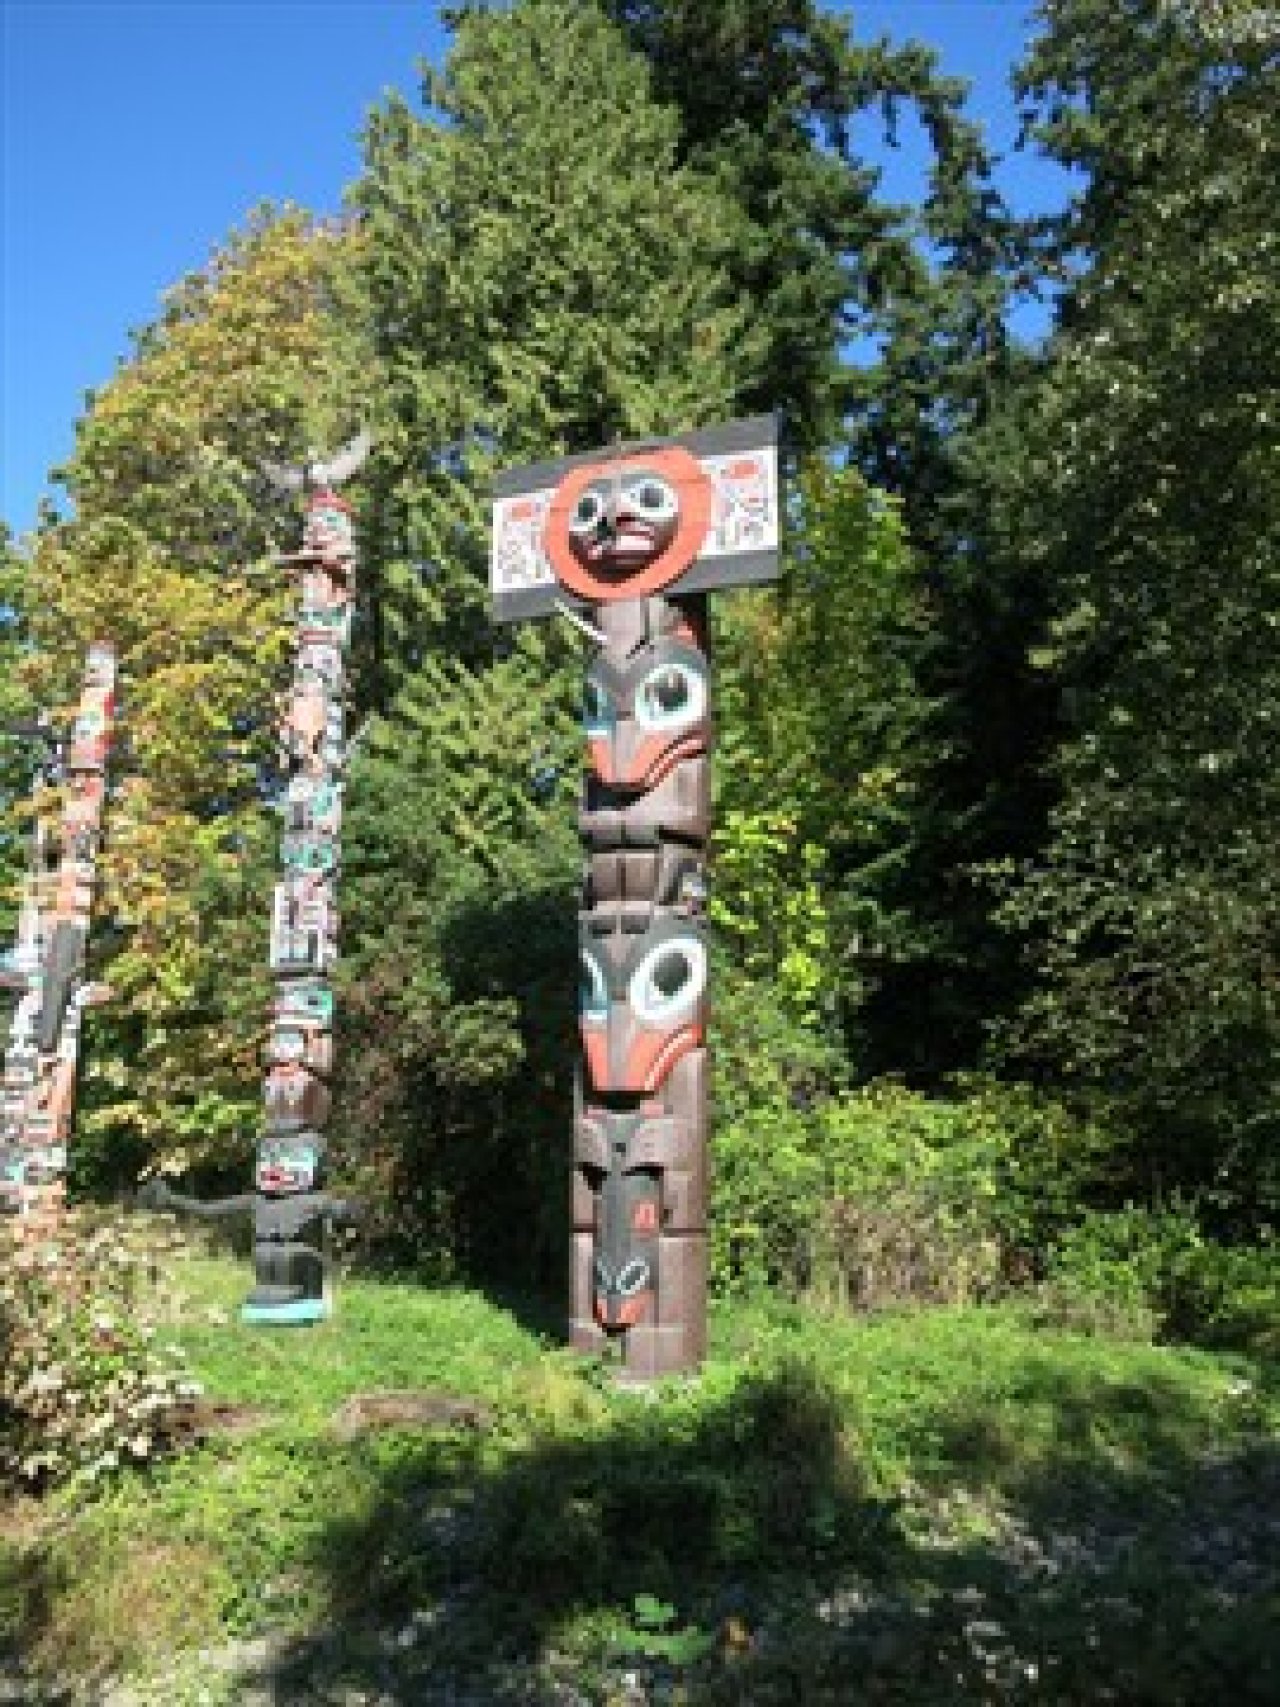 Chief Skedans Mortuary Totem Pole
Source: http://stanleyparkvan.com/stanley-park-van-attractions-totem-poles.html